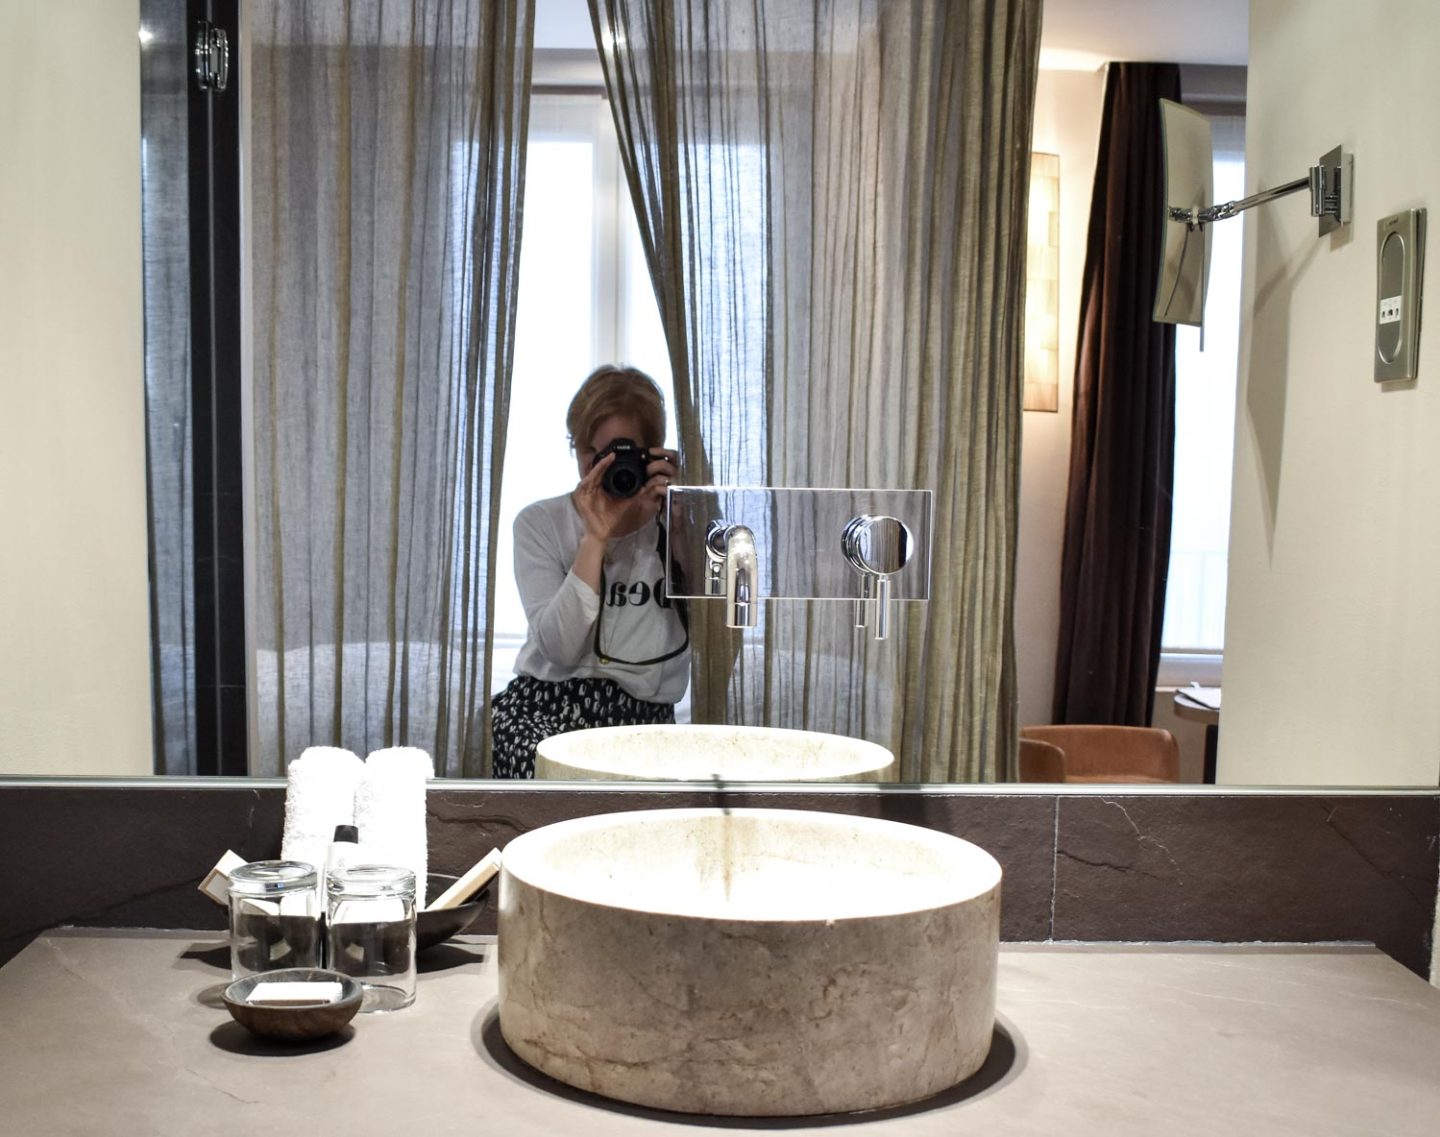 Lifestyle blogger Karen Maurice inside an Emotion room at Hidden Hotel, Paris